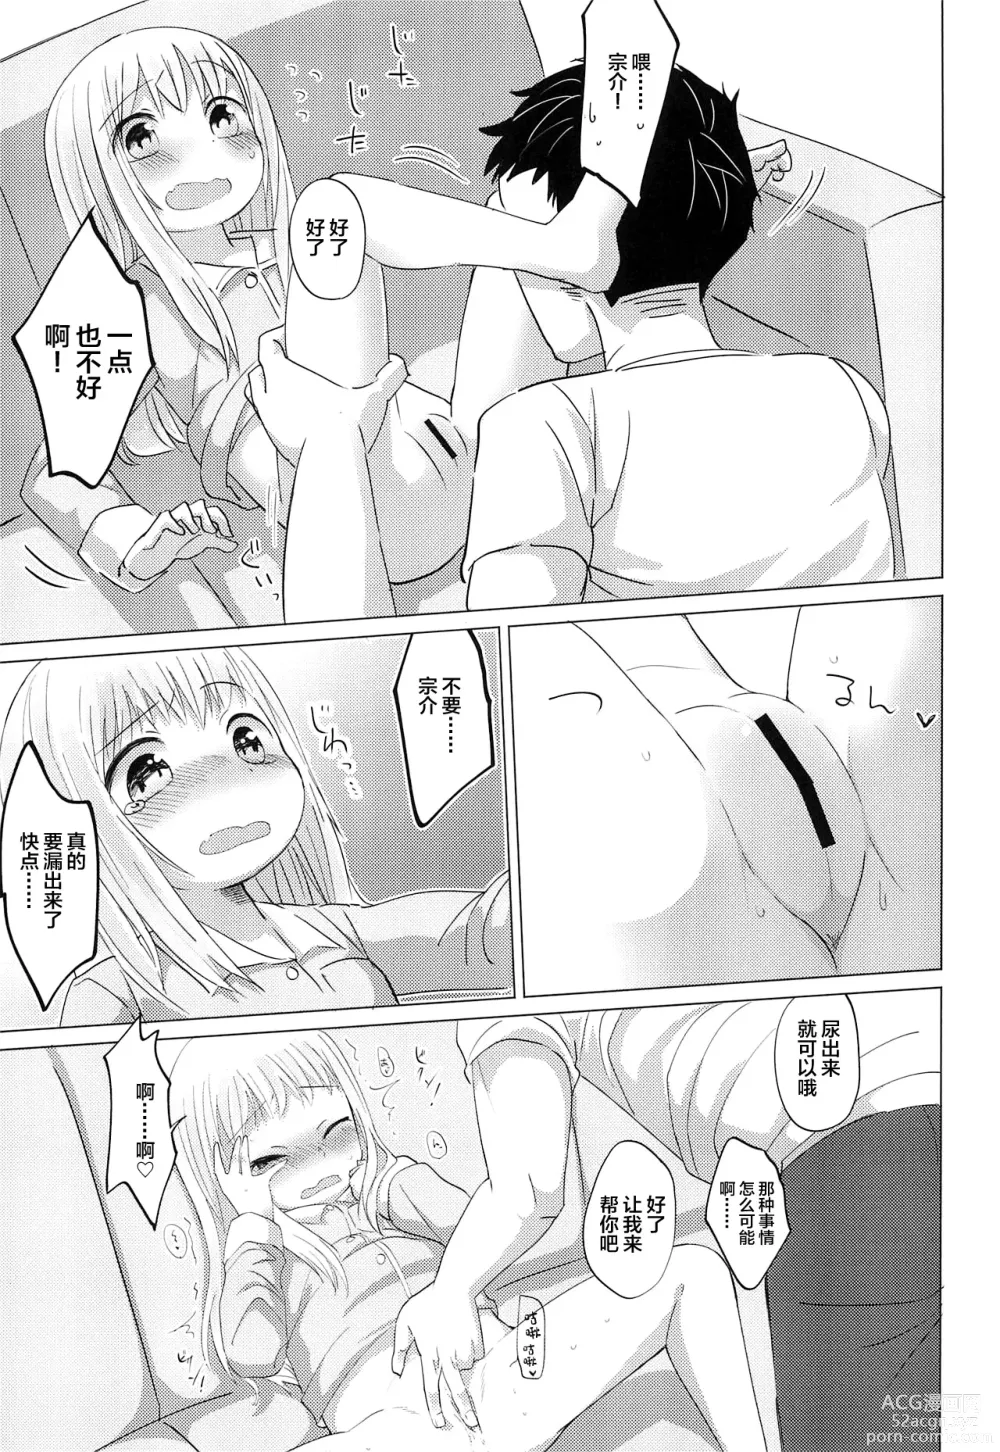 Page 7 of doujinshi 少女夜未央